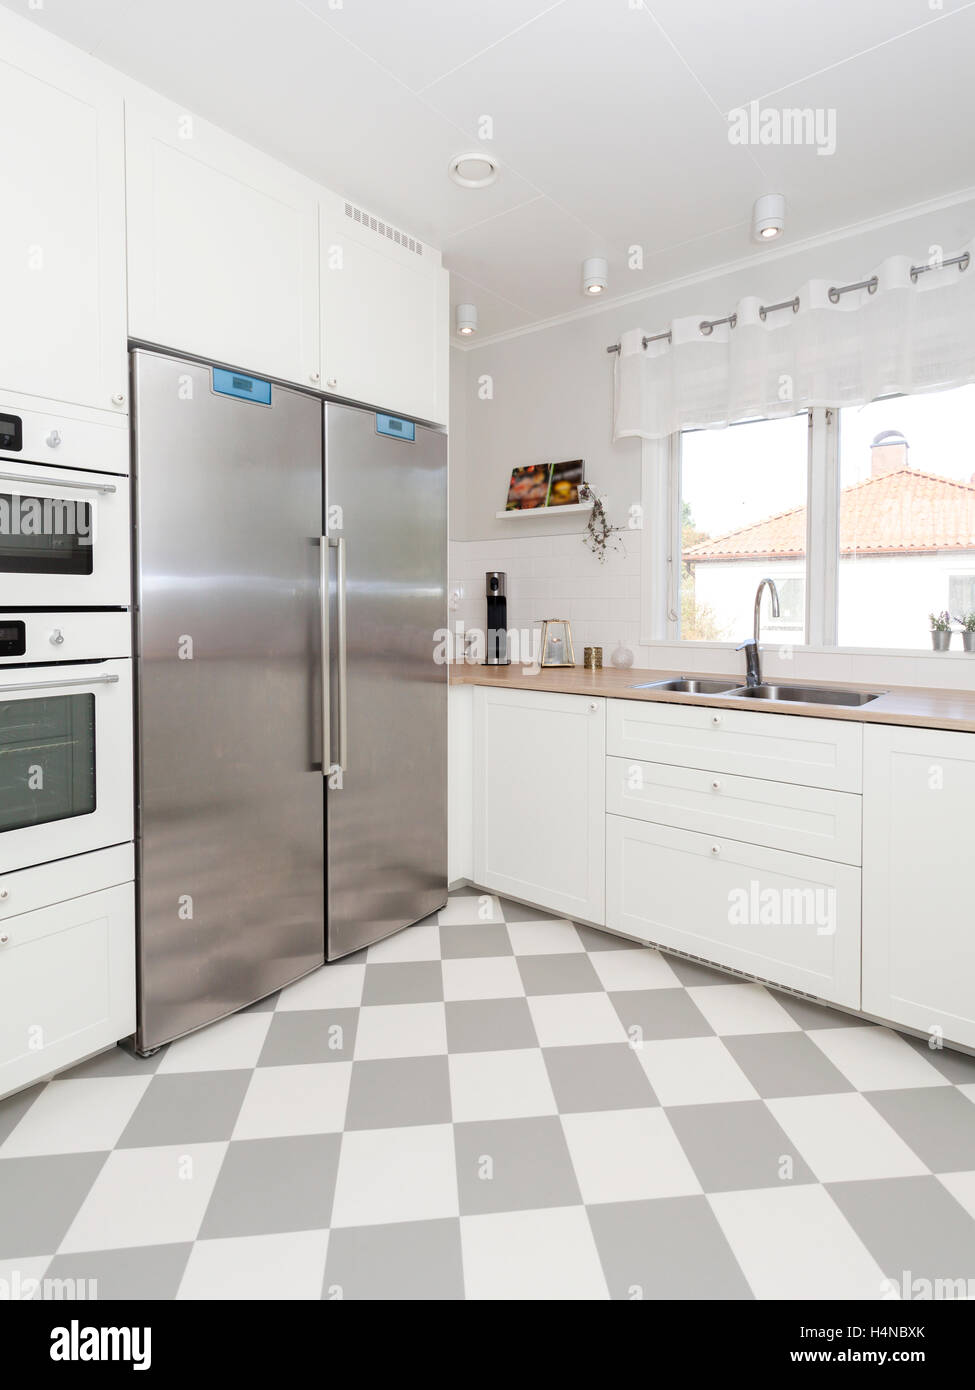 stylish clean kitchen interior with checkered floor Stock Photo